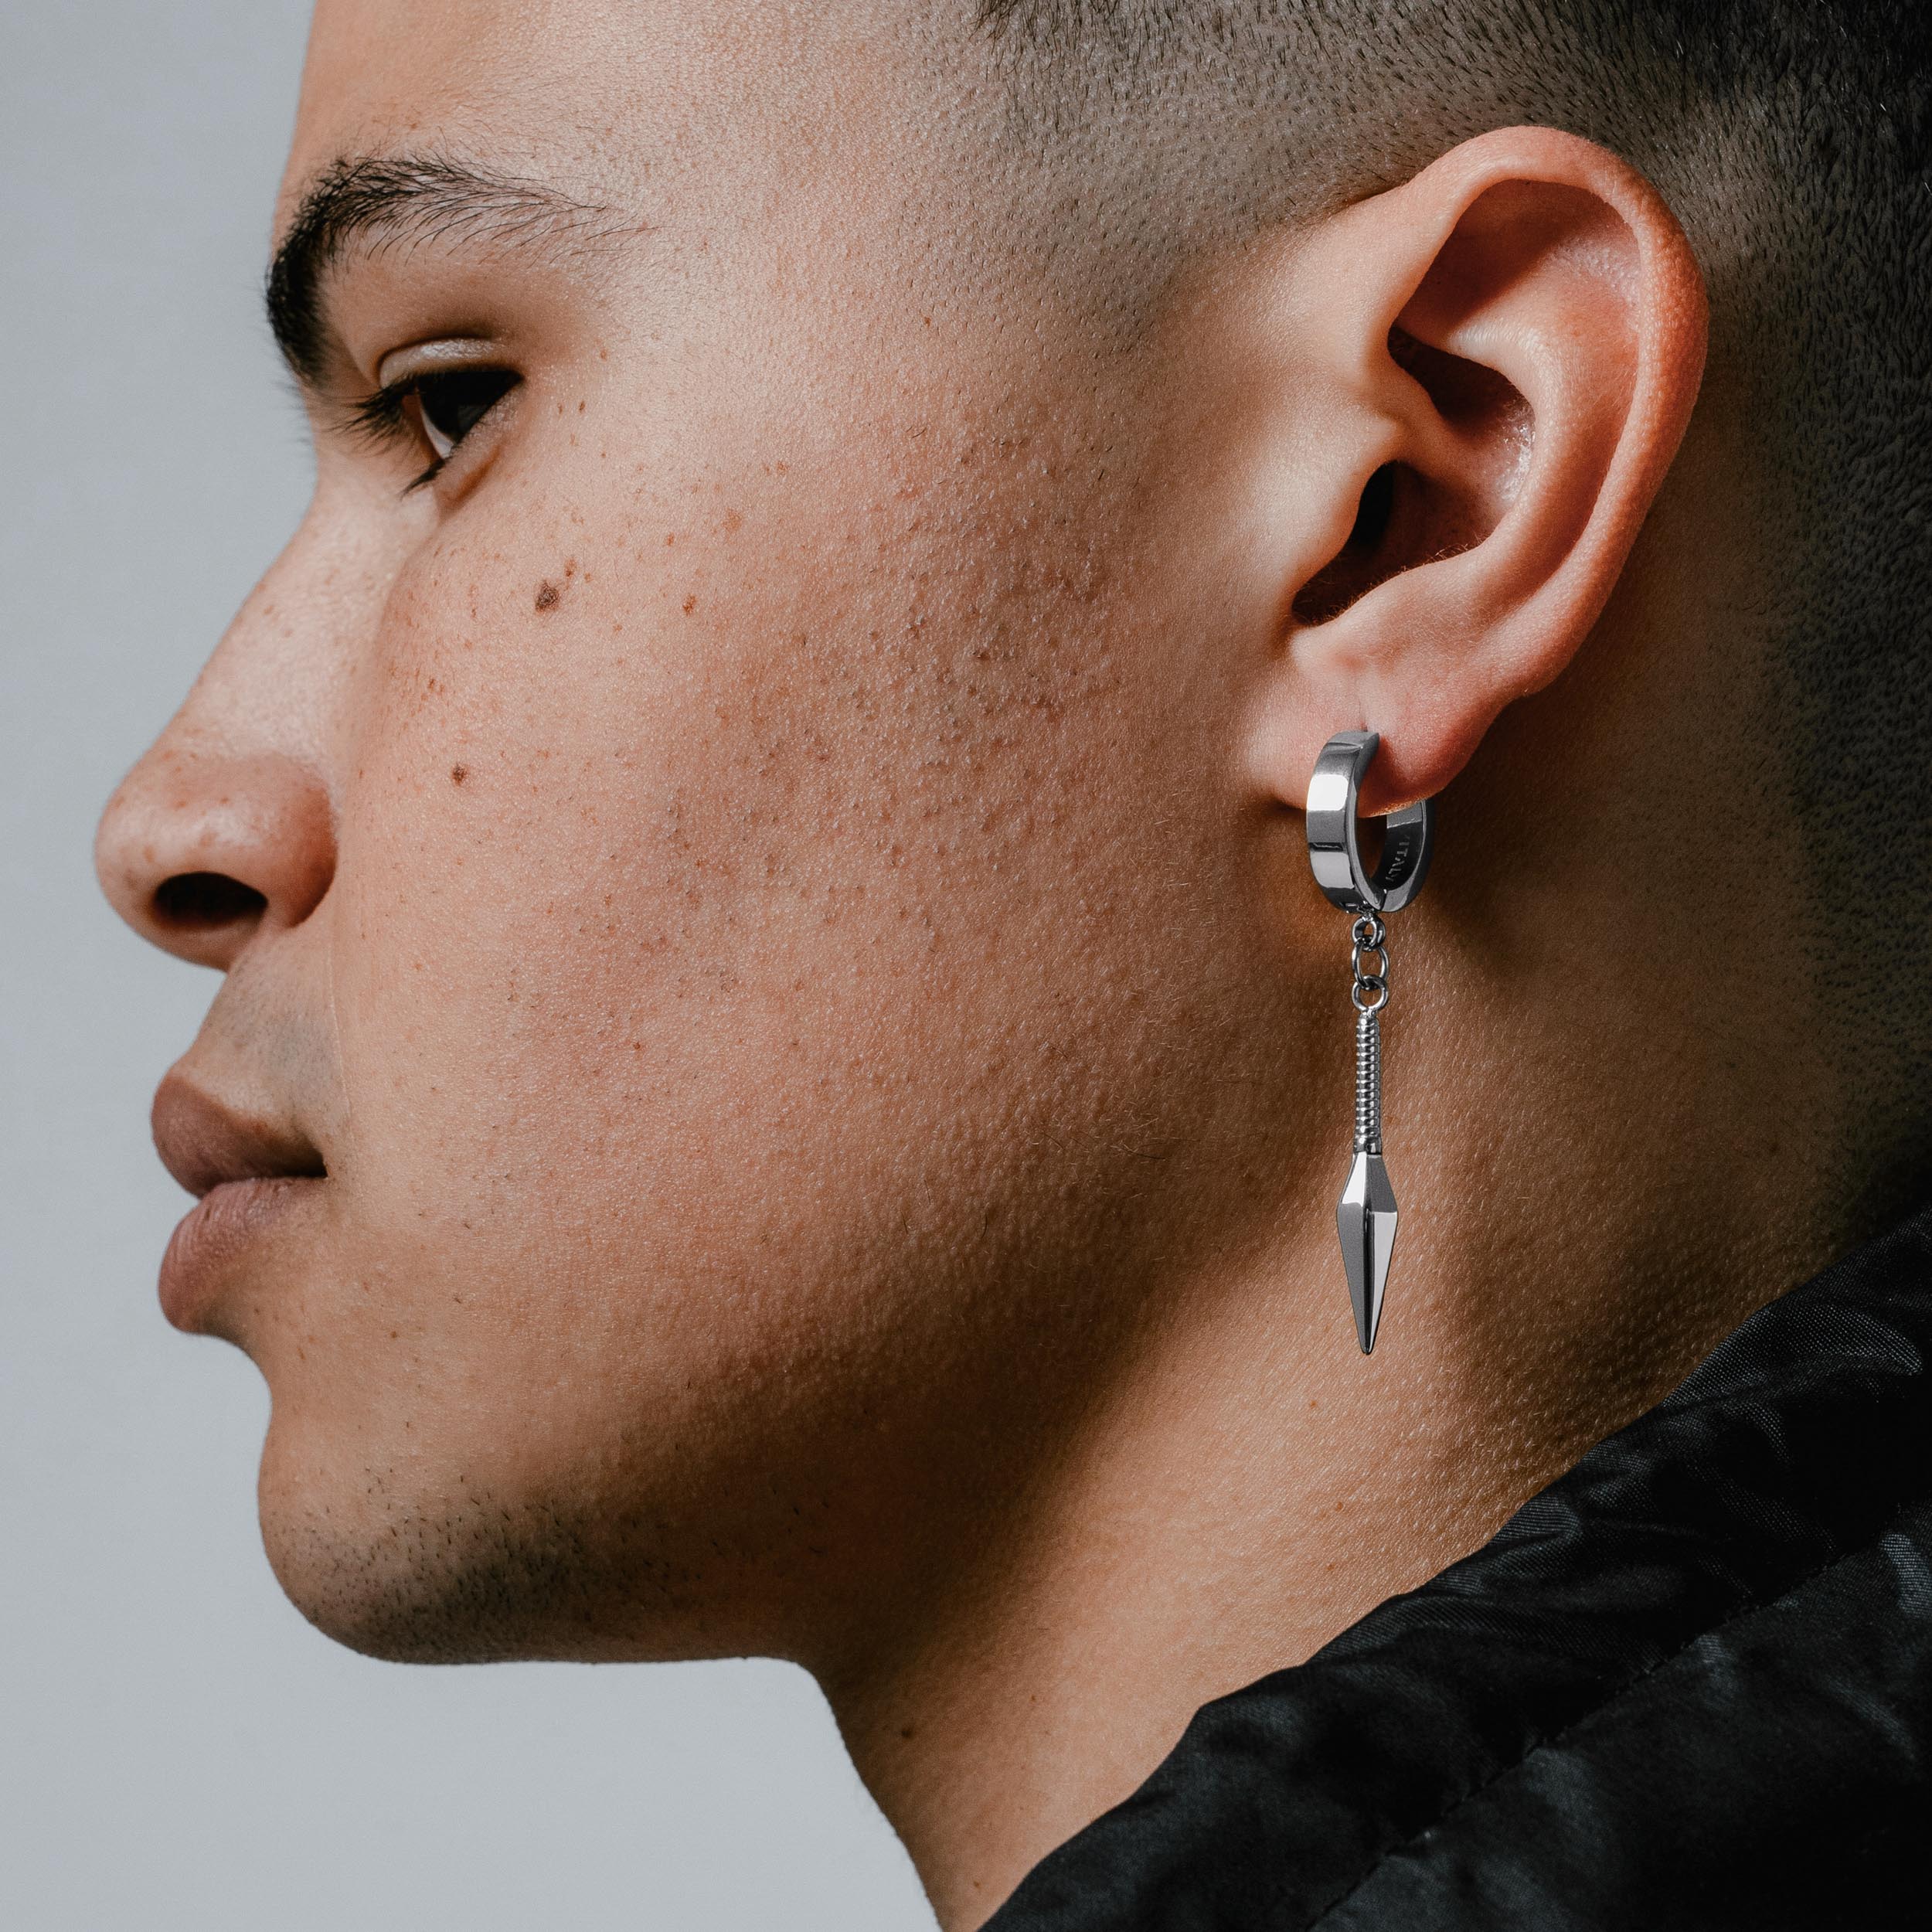 The Best Earrings for Men, From Studs to Dangly Boiz